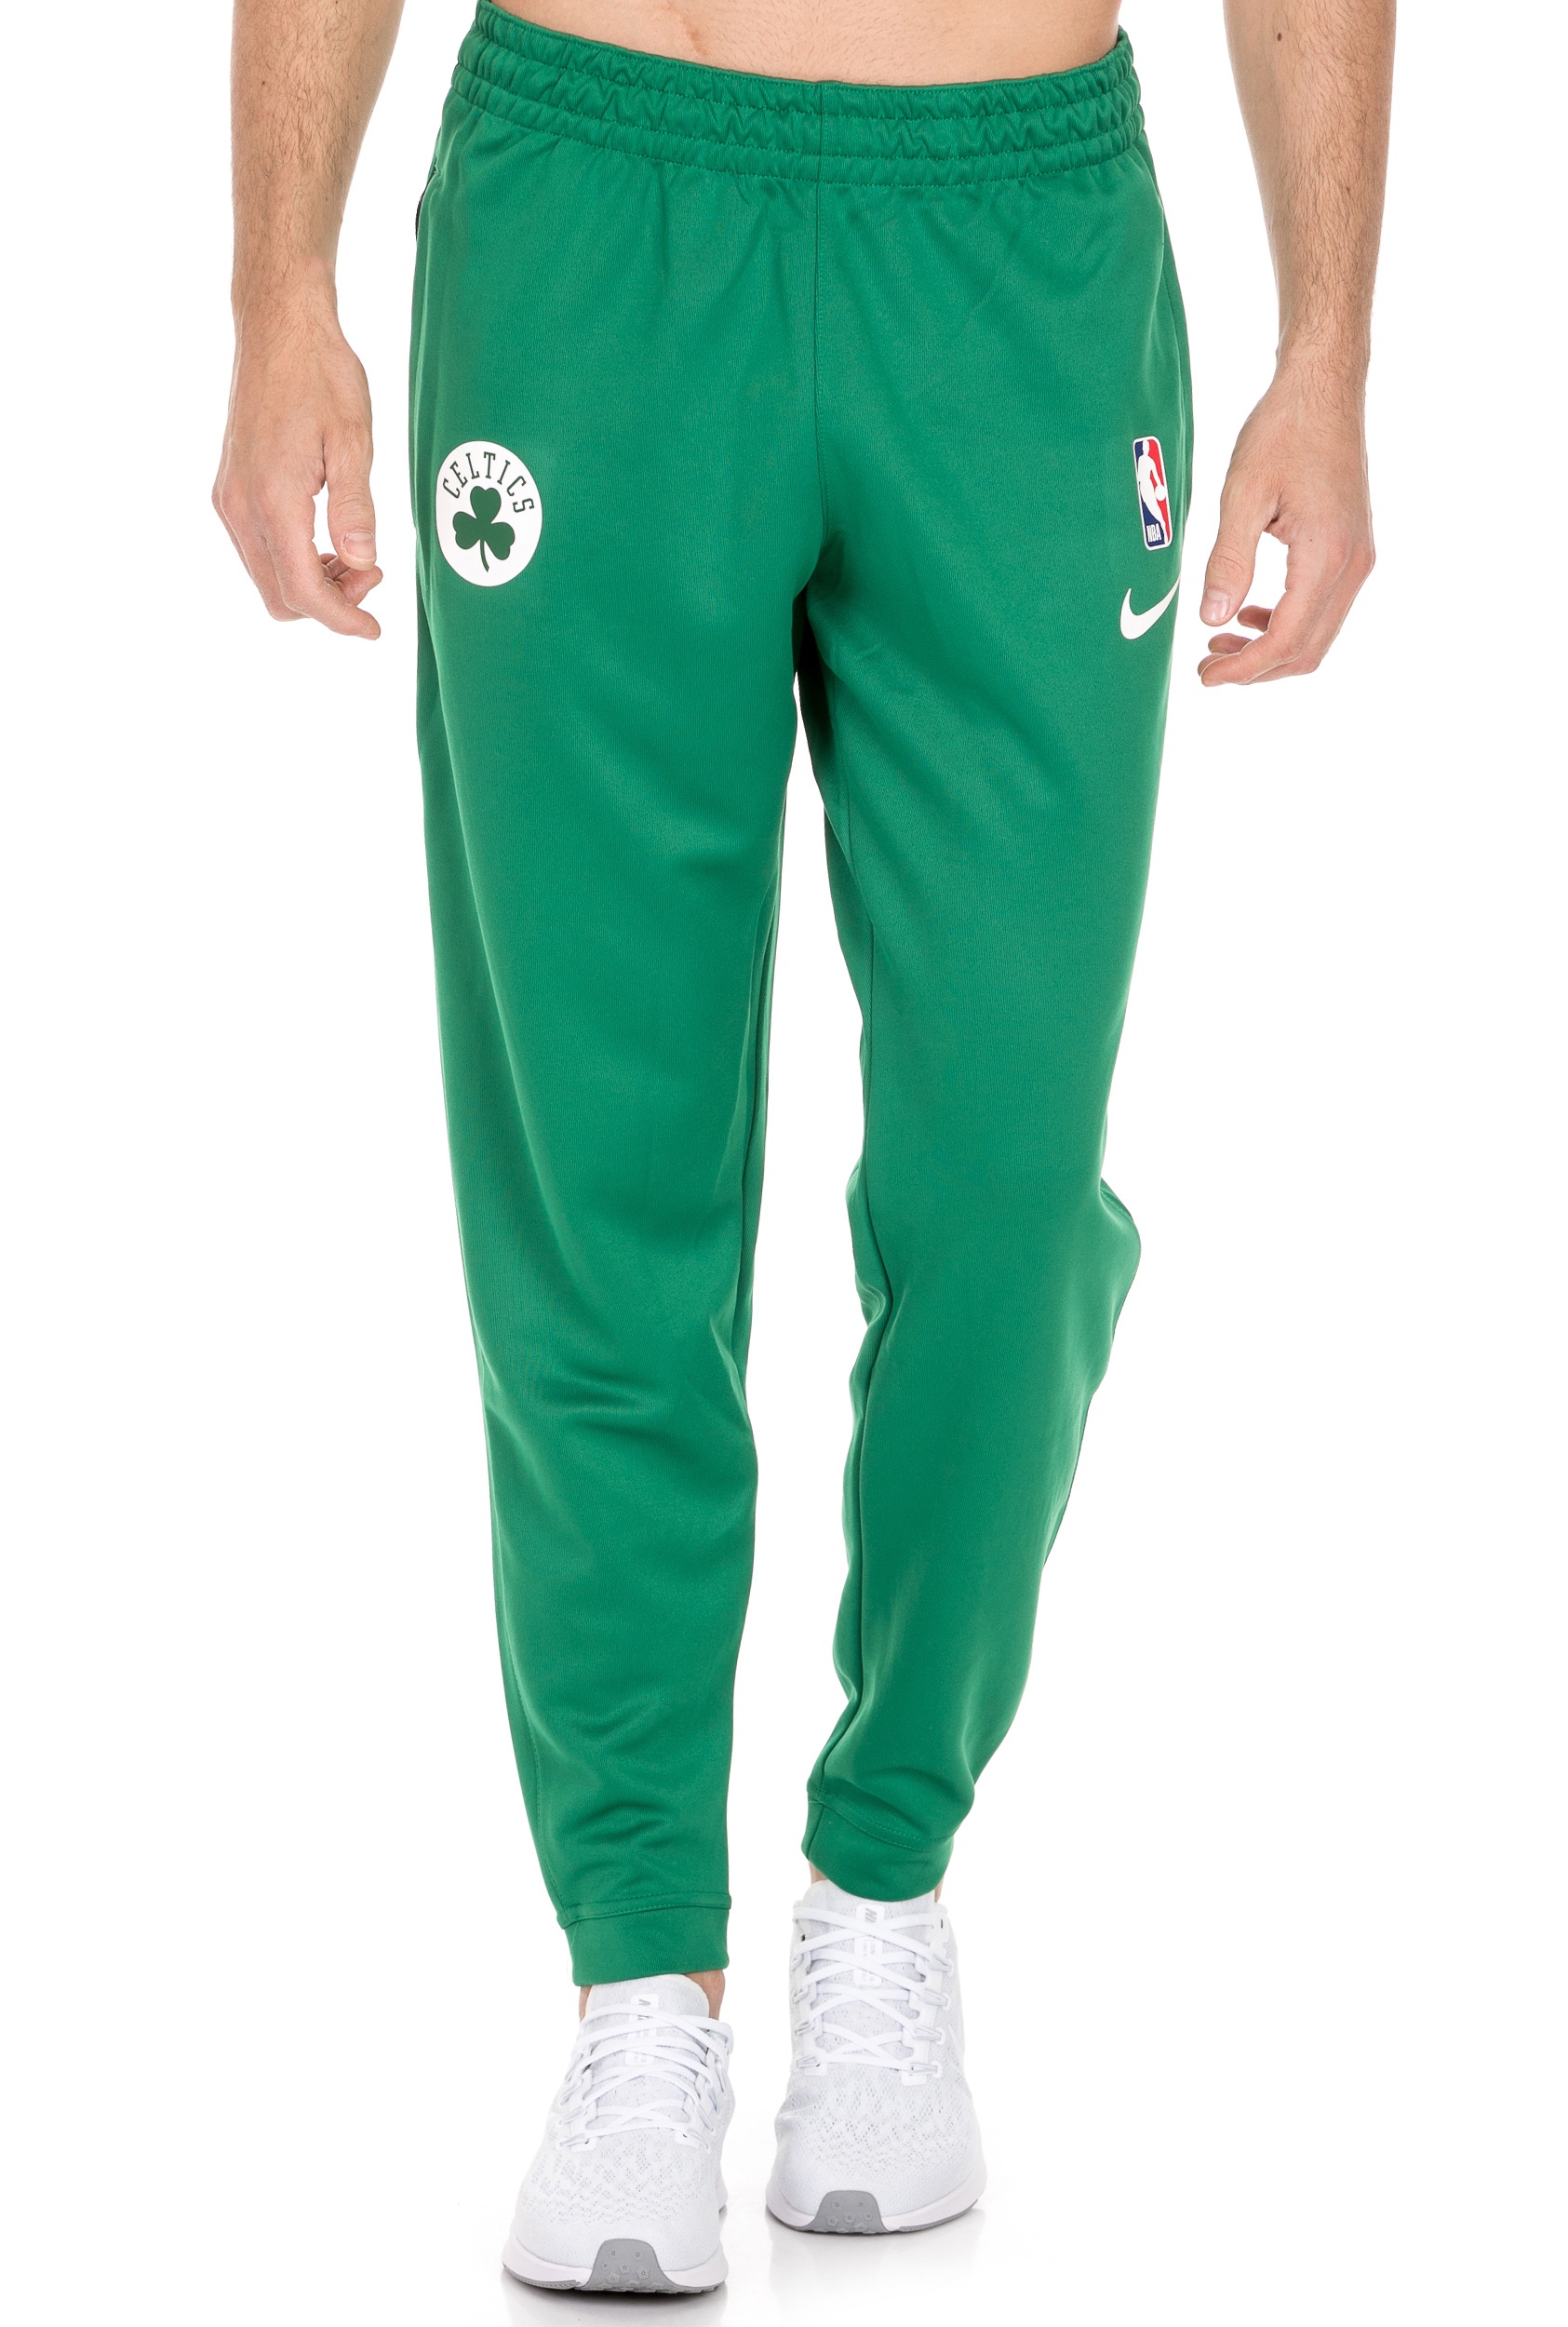 NIKE - Ανδρικό παντελόνι φόρμας NIKE Boston Celtics Spotlight πράσινο